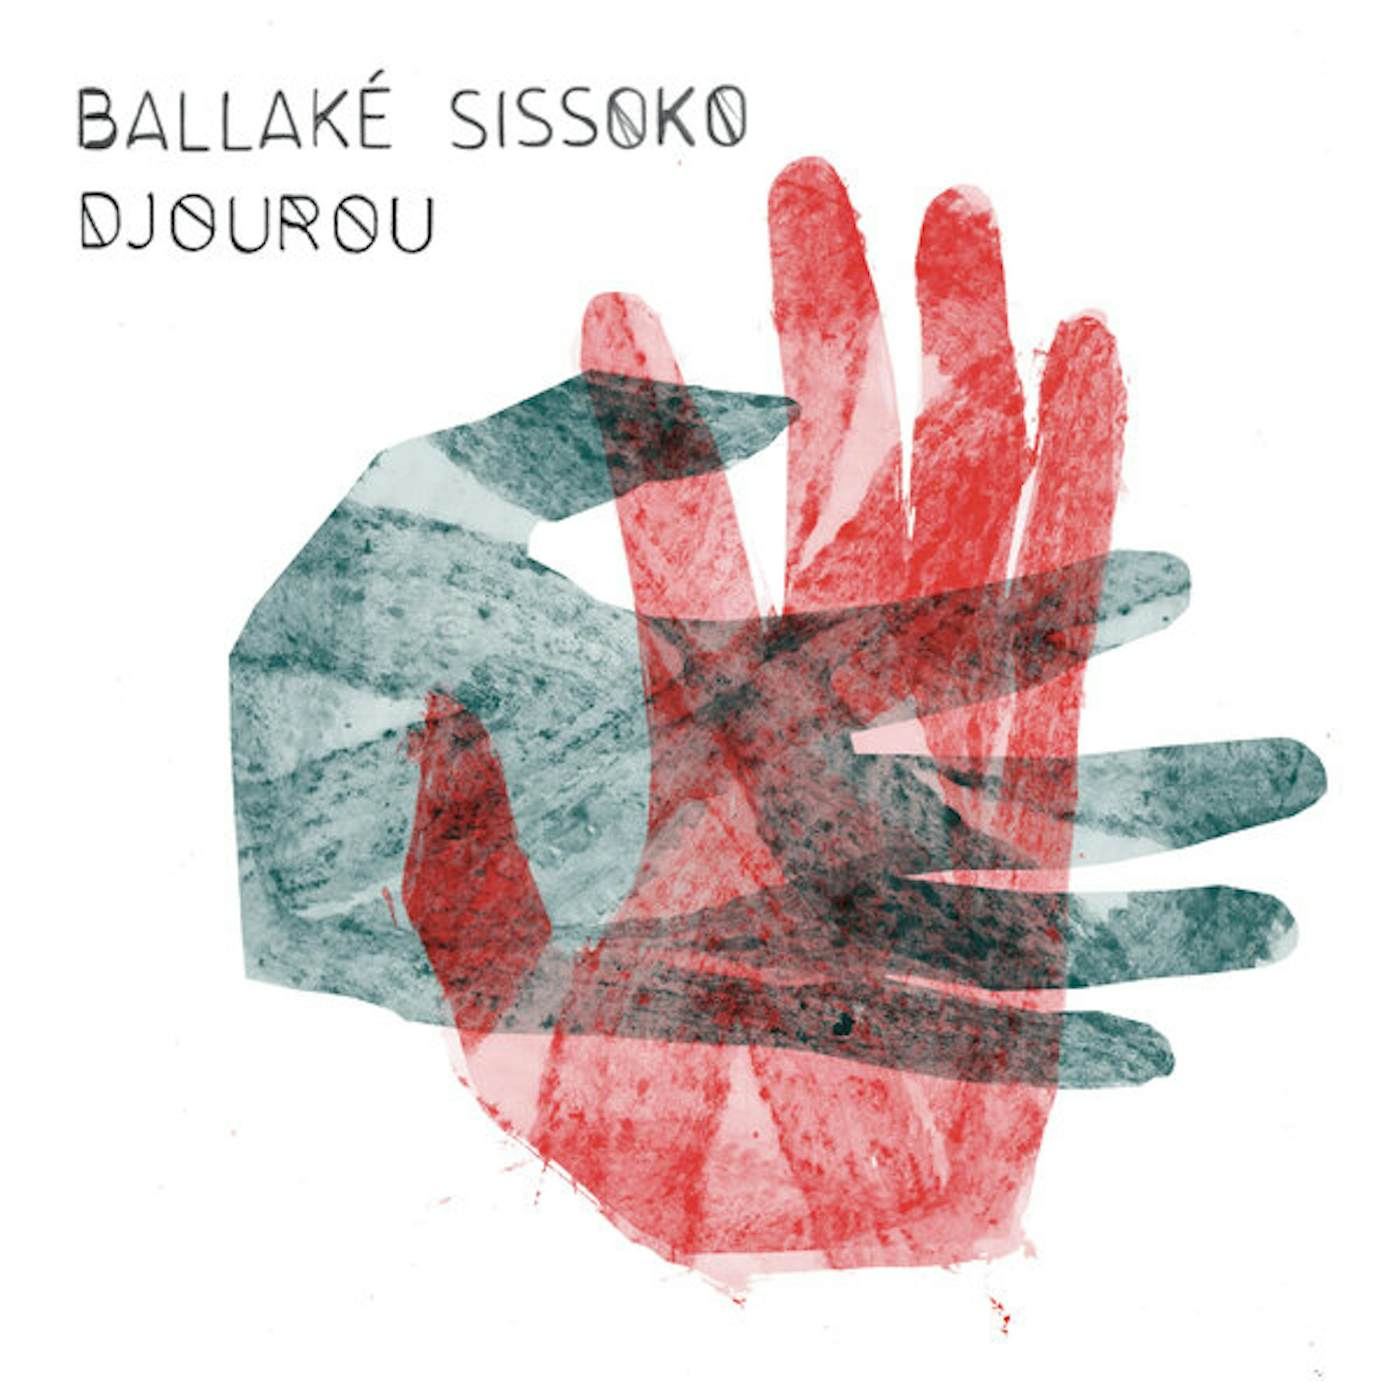 Ballaké Sissoko Djourou Vinyl Record